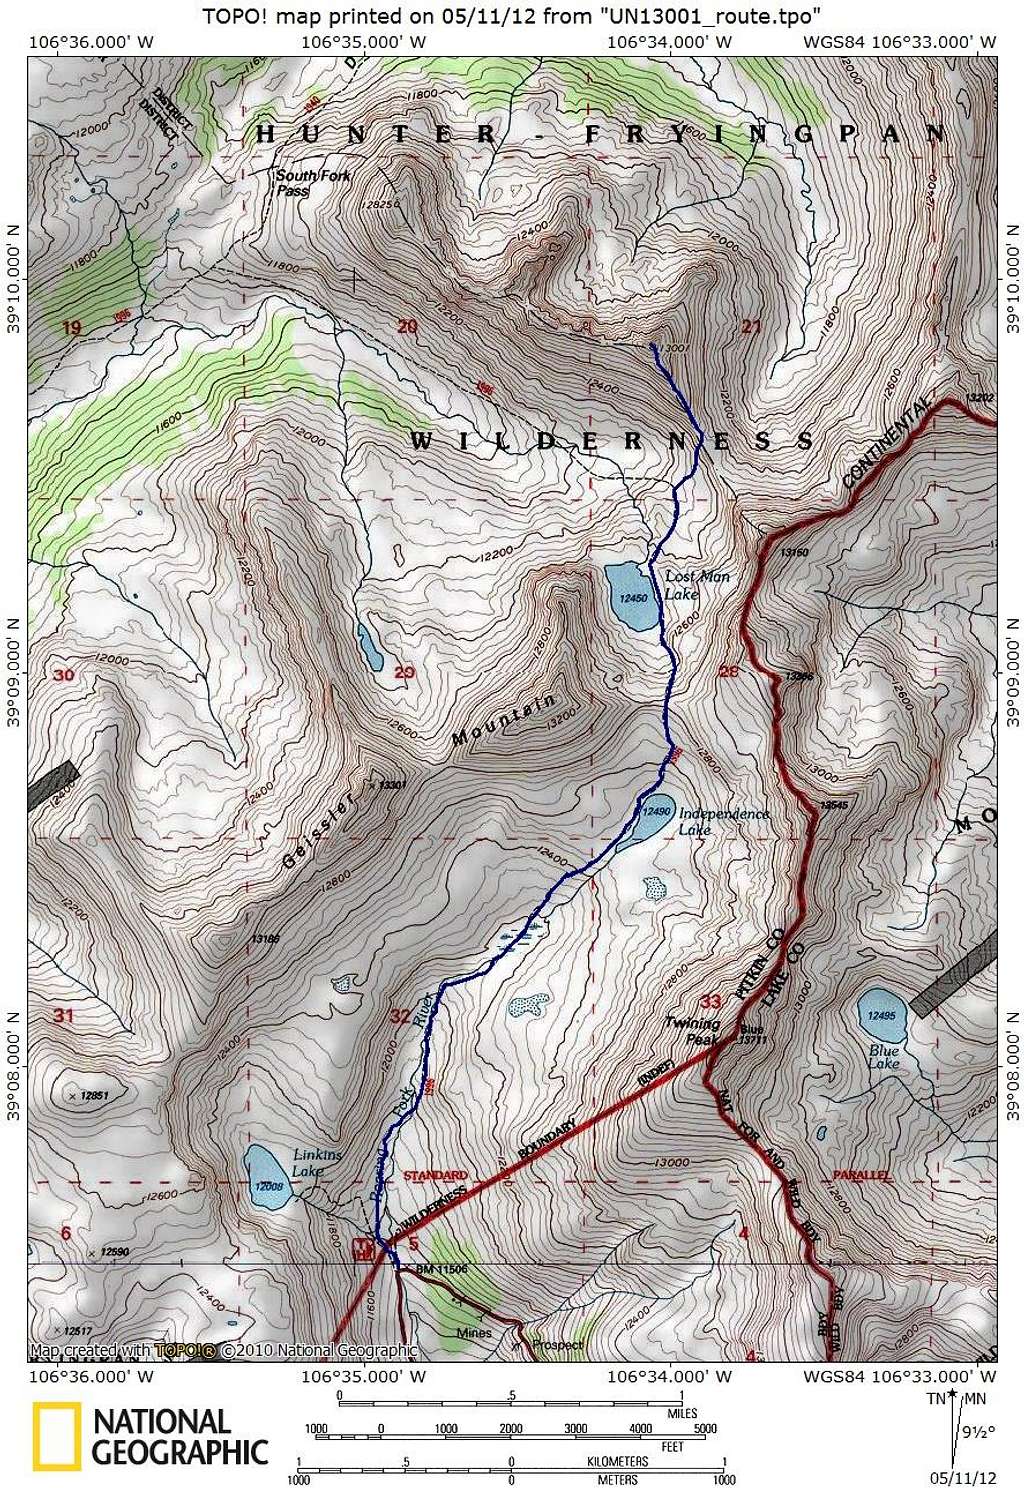 Southeast Ridge Route